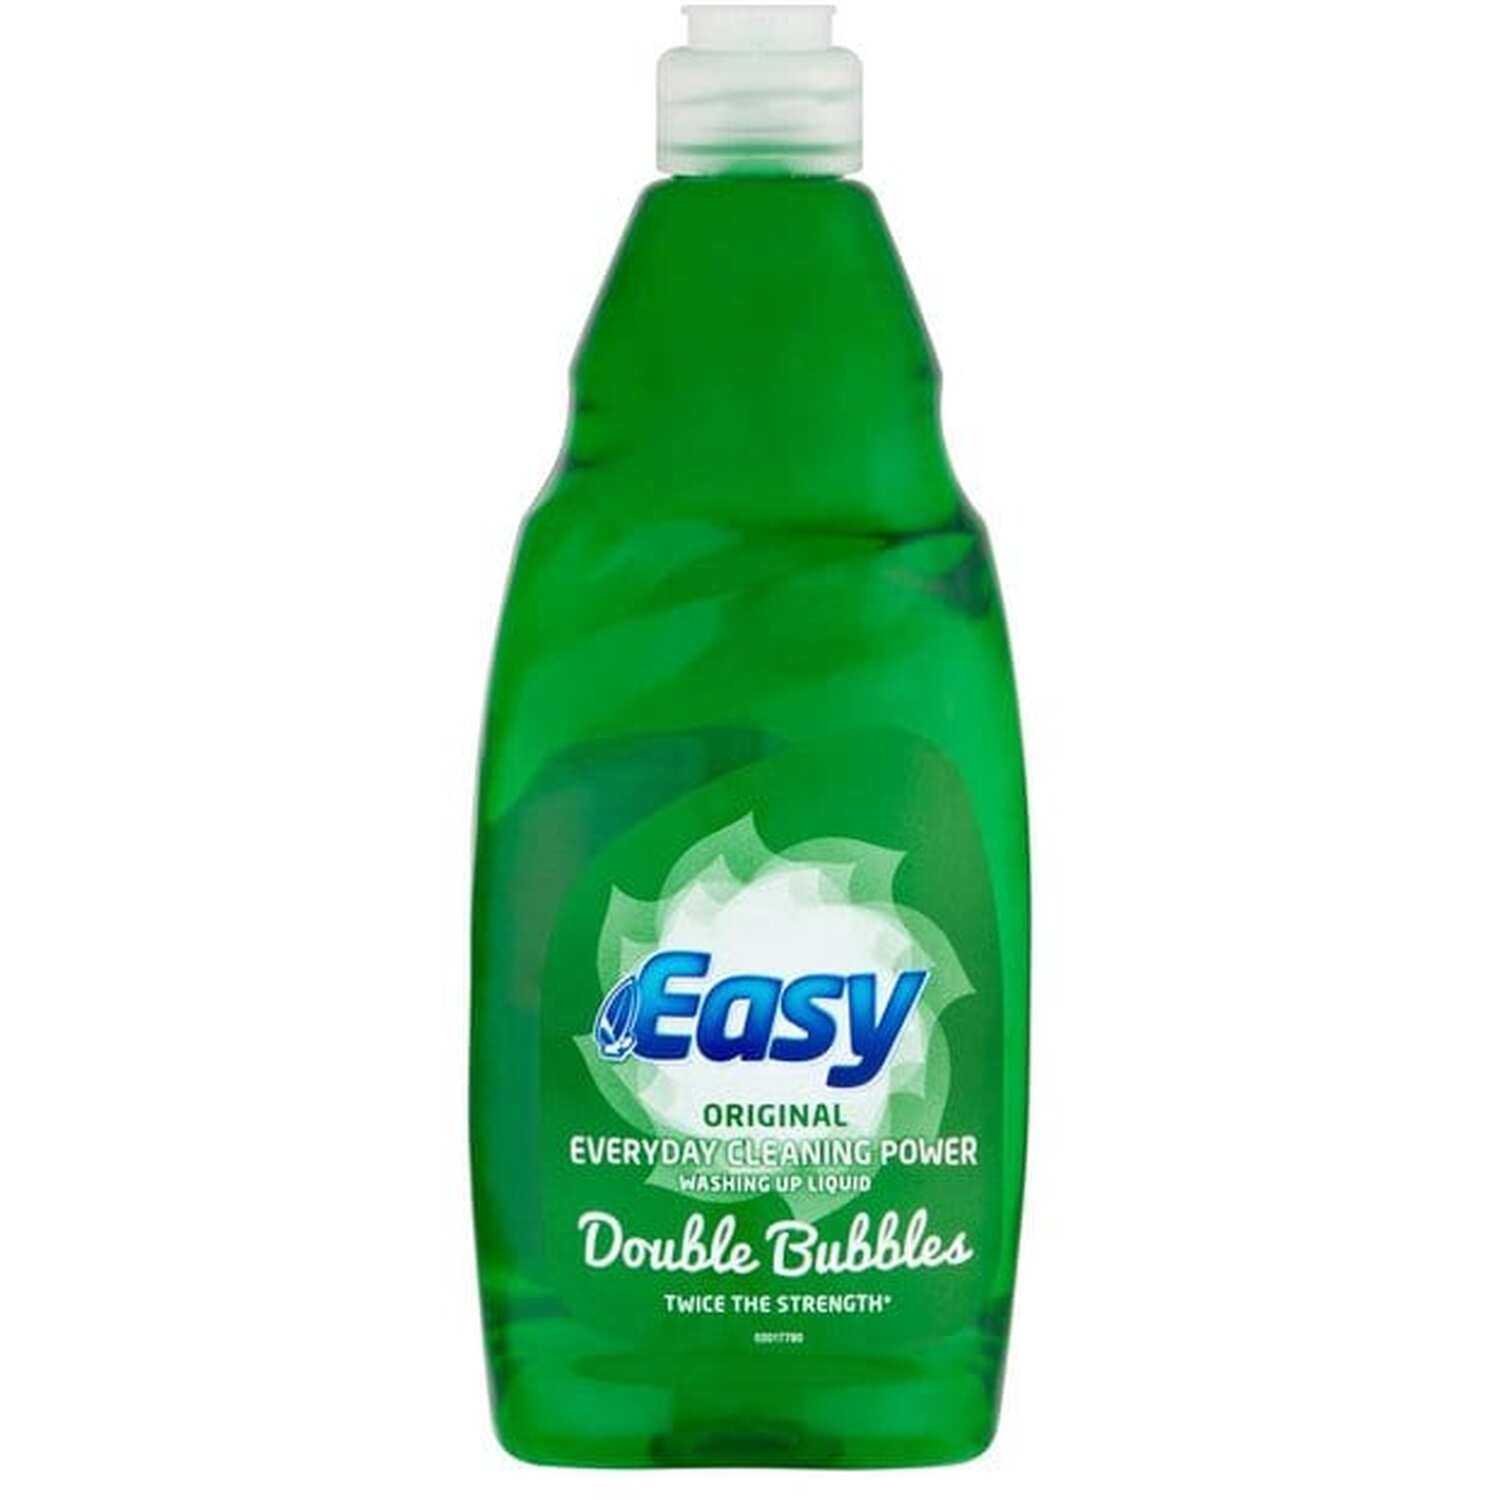 Easy Double Bubbles Washing Up Liquid - 1l / Original Image 2